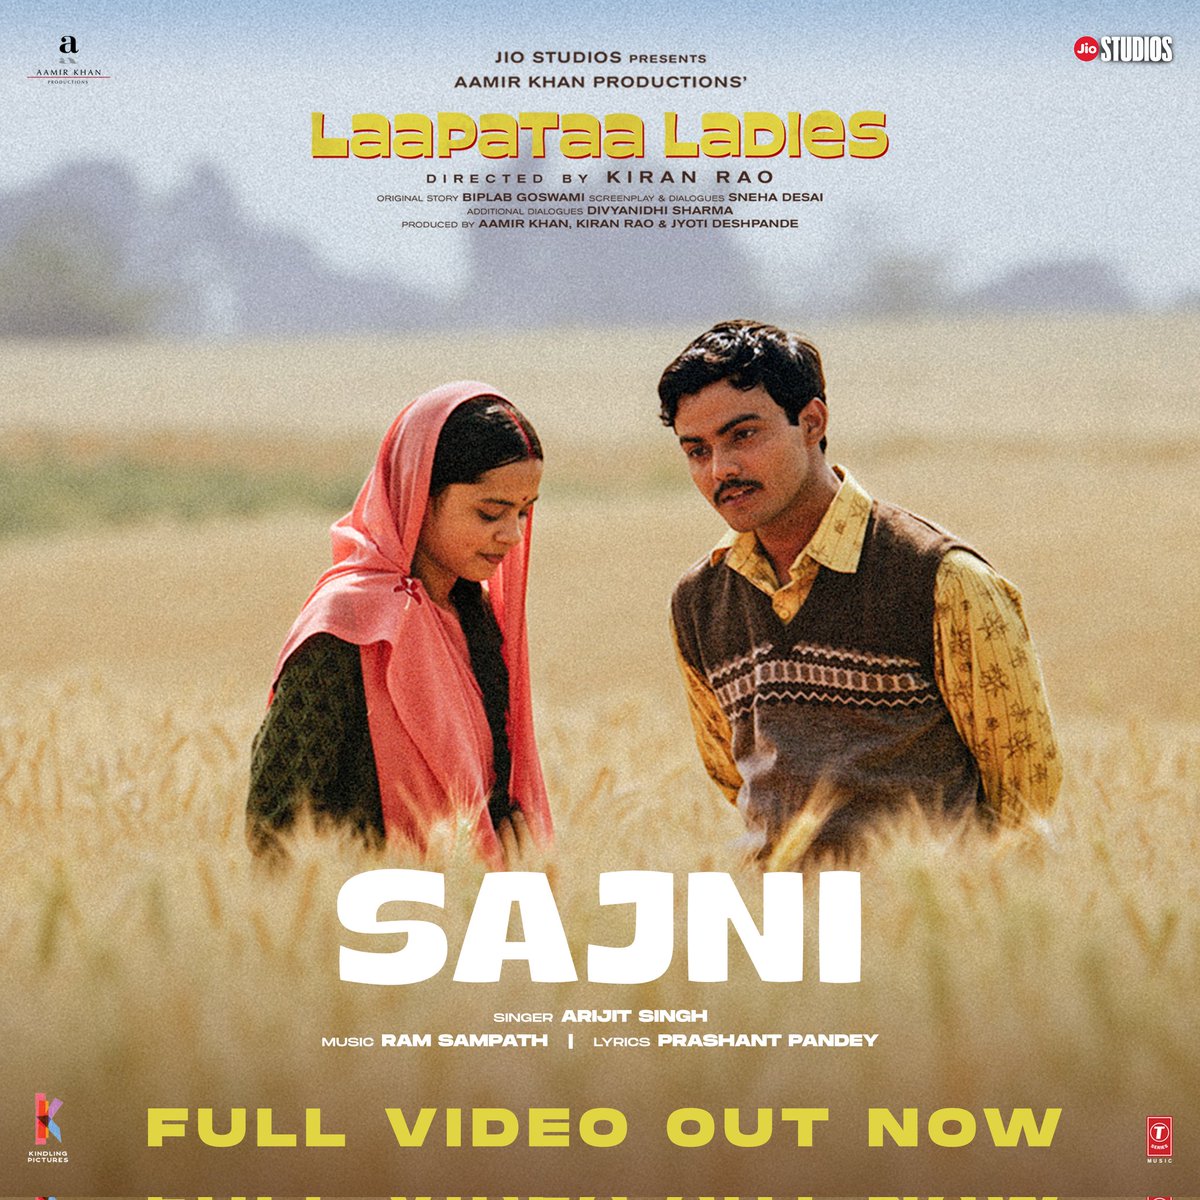 A classical Arijit Masterpiece 🙌🏻🪄 Watch #Sajni full video out now! 🌻 bit.ly/Sajni-FullVideo #LaapataaLadies @nitanshi_goel @PratibhaRanta #SparshShrivastava @chhaya_kadam @ravikishann #Aamirkhan #KiranRao #JyotiDeshpande @AKPPL_Official @KindlingIndia @jiostudios